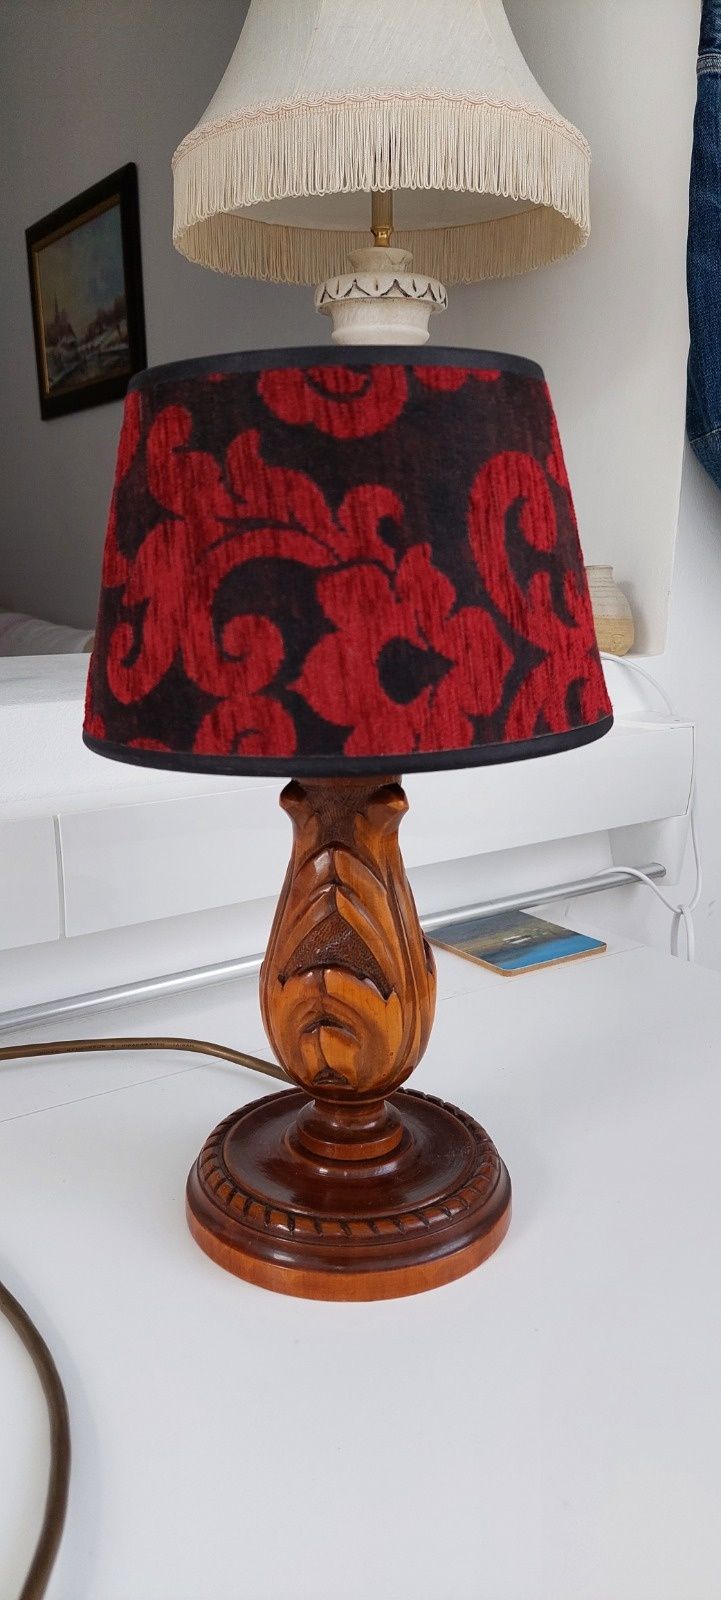 Lampa veioza vintage colectie lemn masiv tradițională România 1960